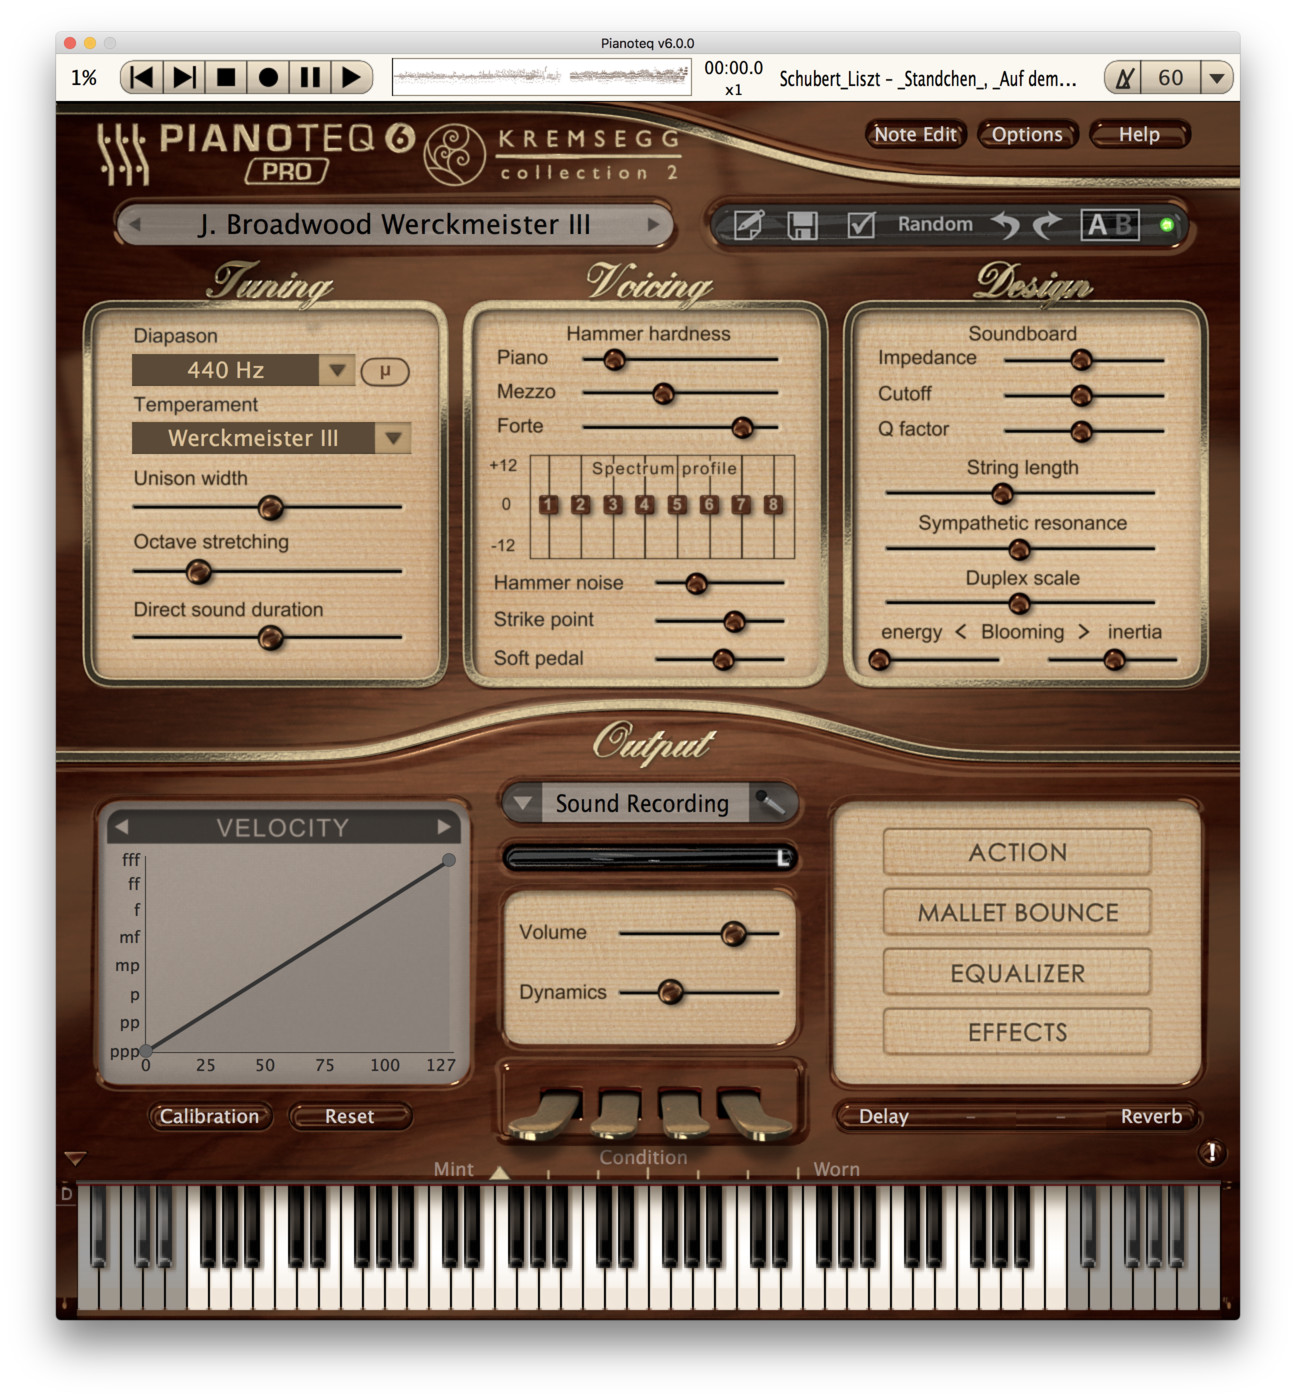 Kremsegg Historical Piano Collection 2